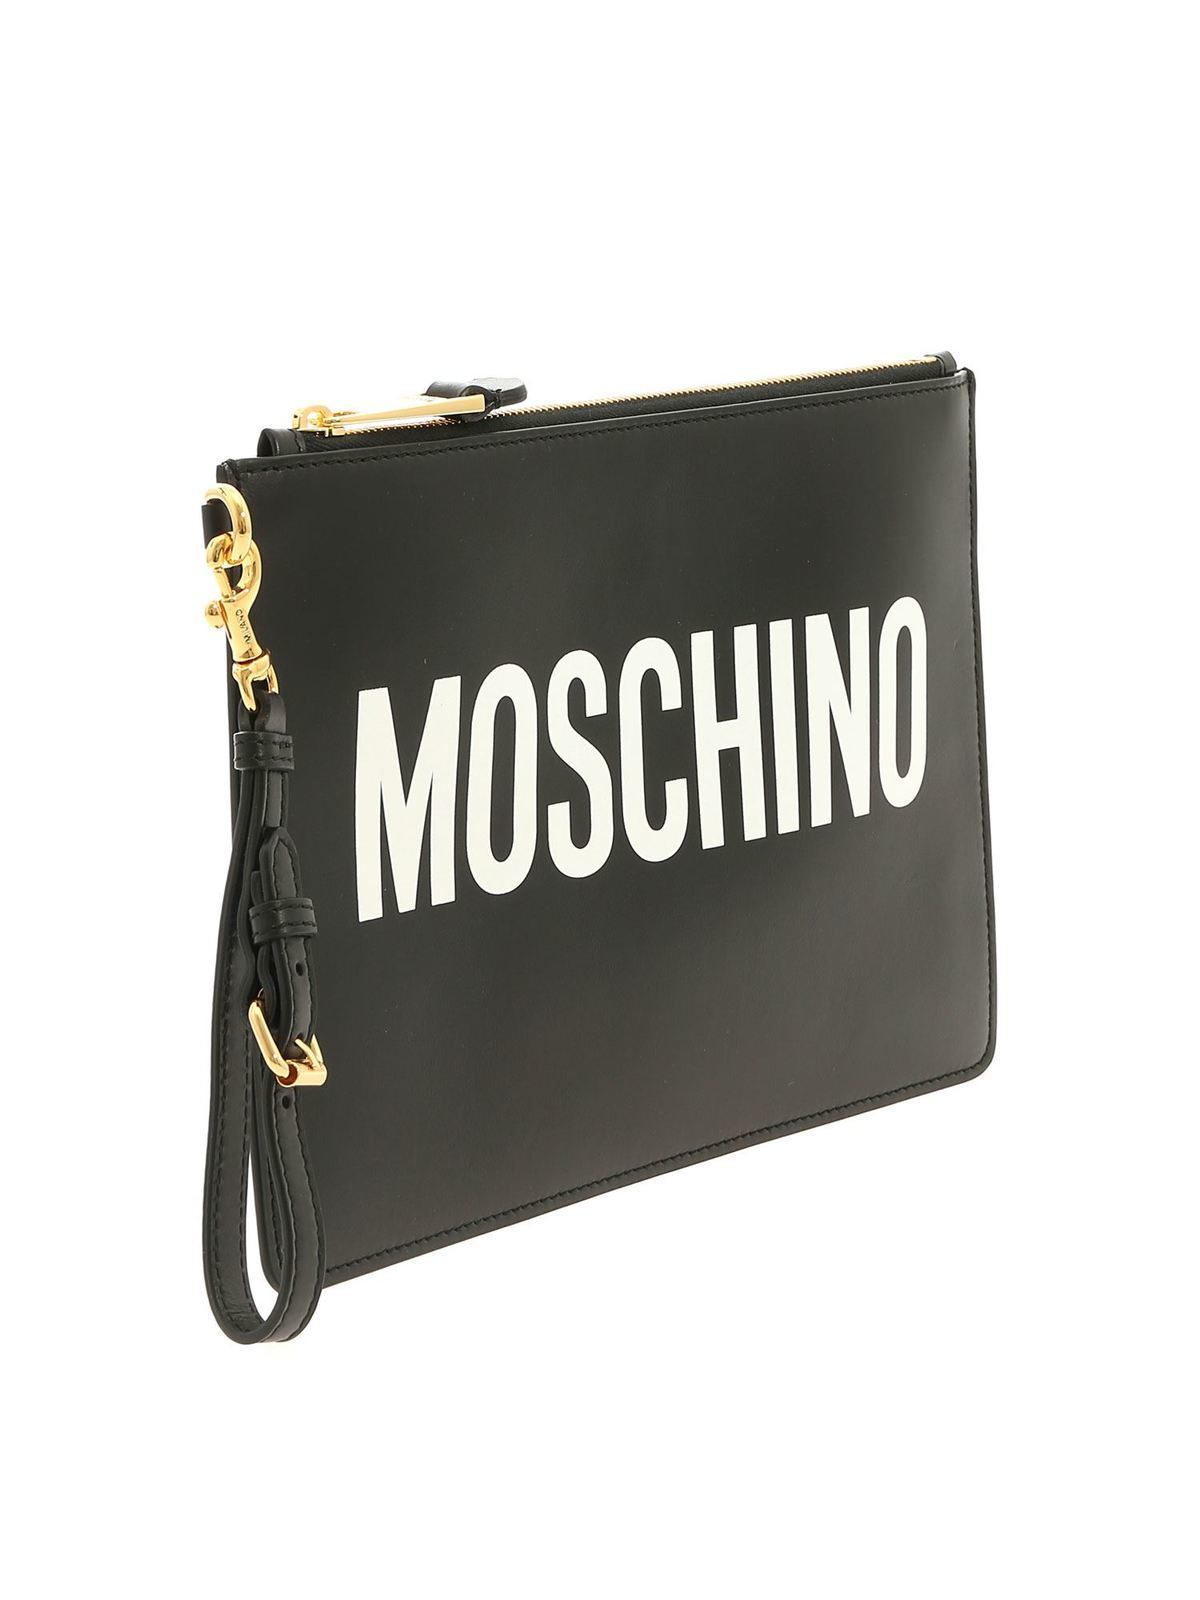 Moschino - Logo print leather clutch 